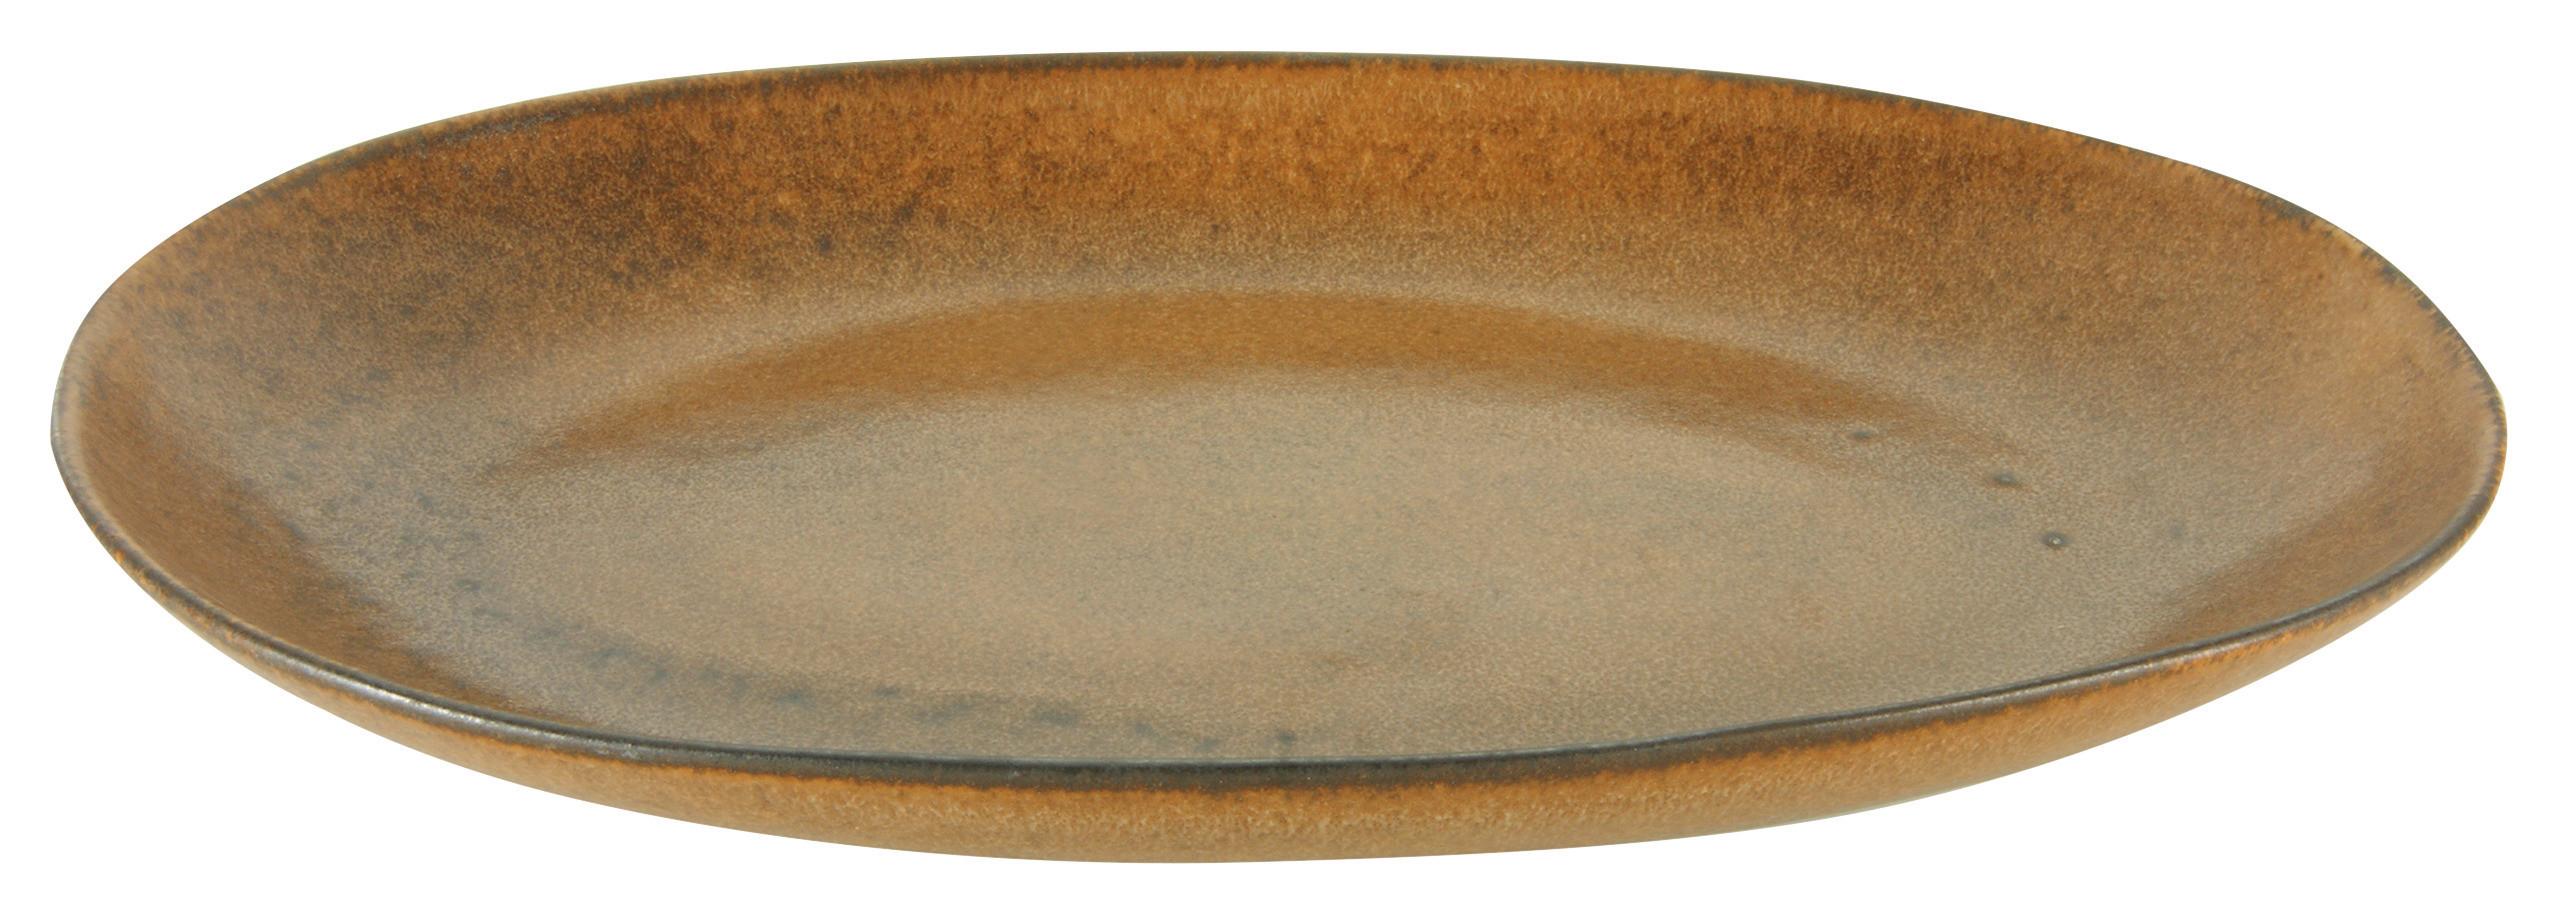 Platzteller Sahara aus Keramik in Braun - Braun, LIFESTYLE, Keramik (29,5/18/3,5cm) - Zandiara